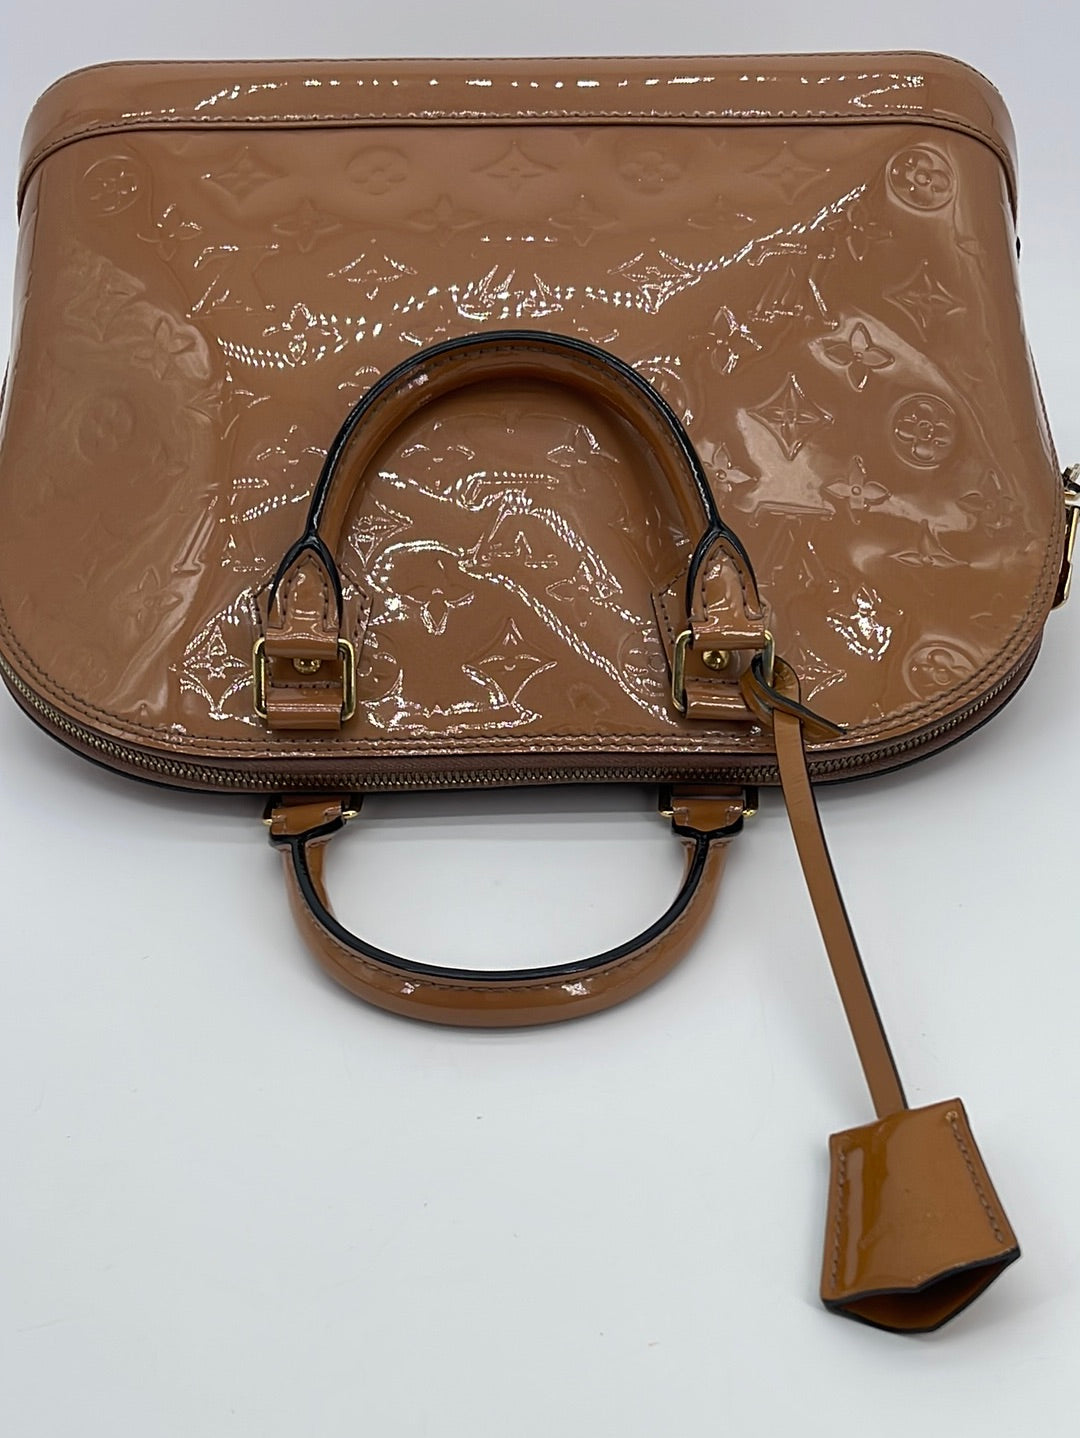 PRELOVED Louis Vuitton Tan Monogram Vernis Alma PM Handbag FL0183 0918 –  KimmieBBags LLC